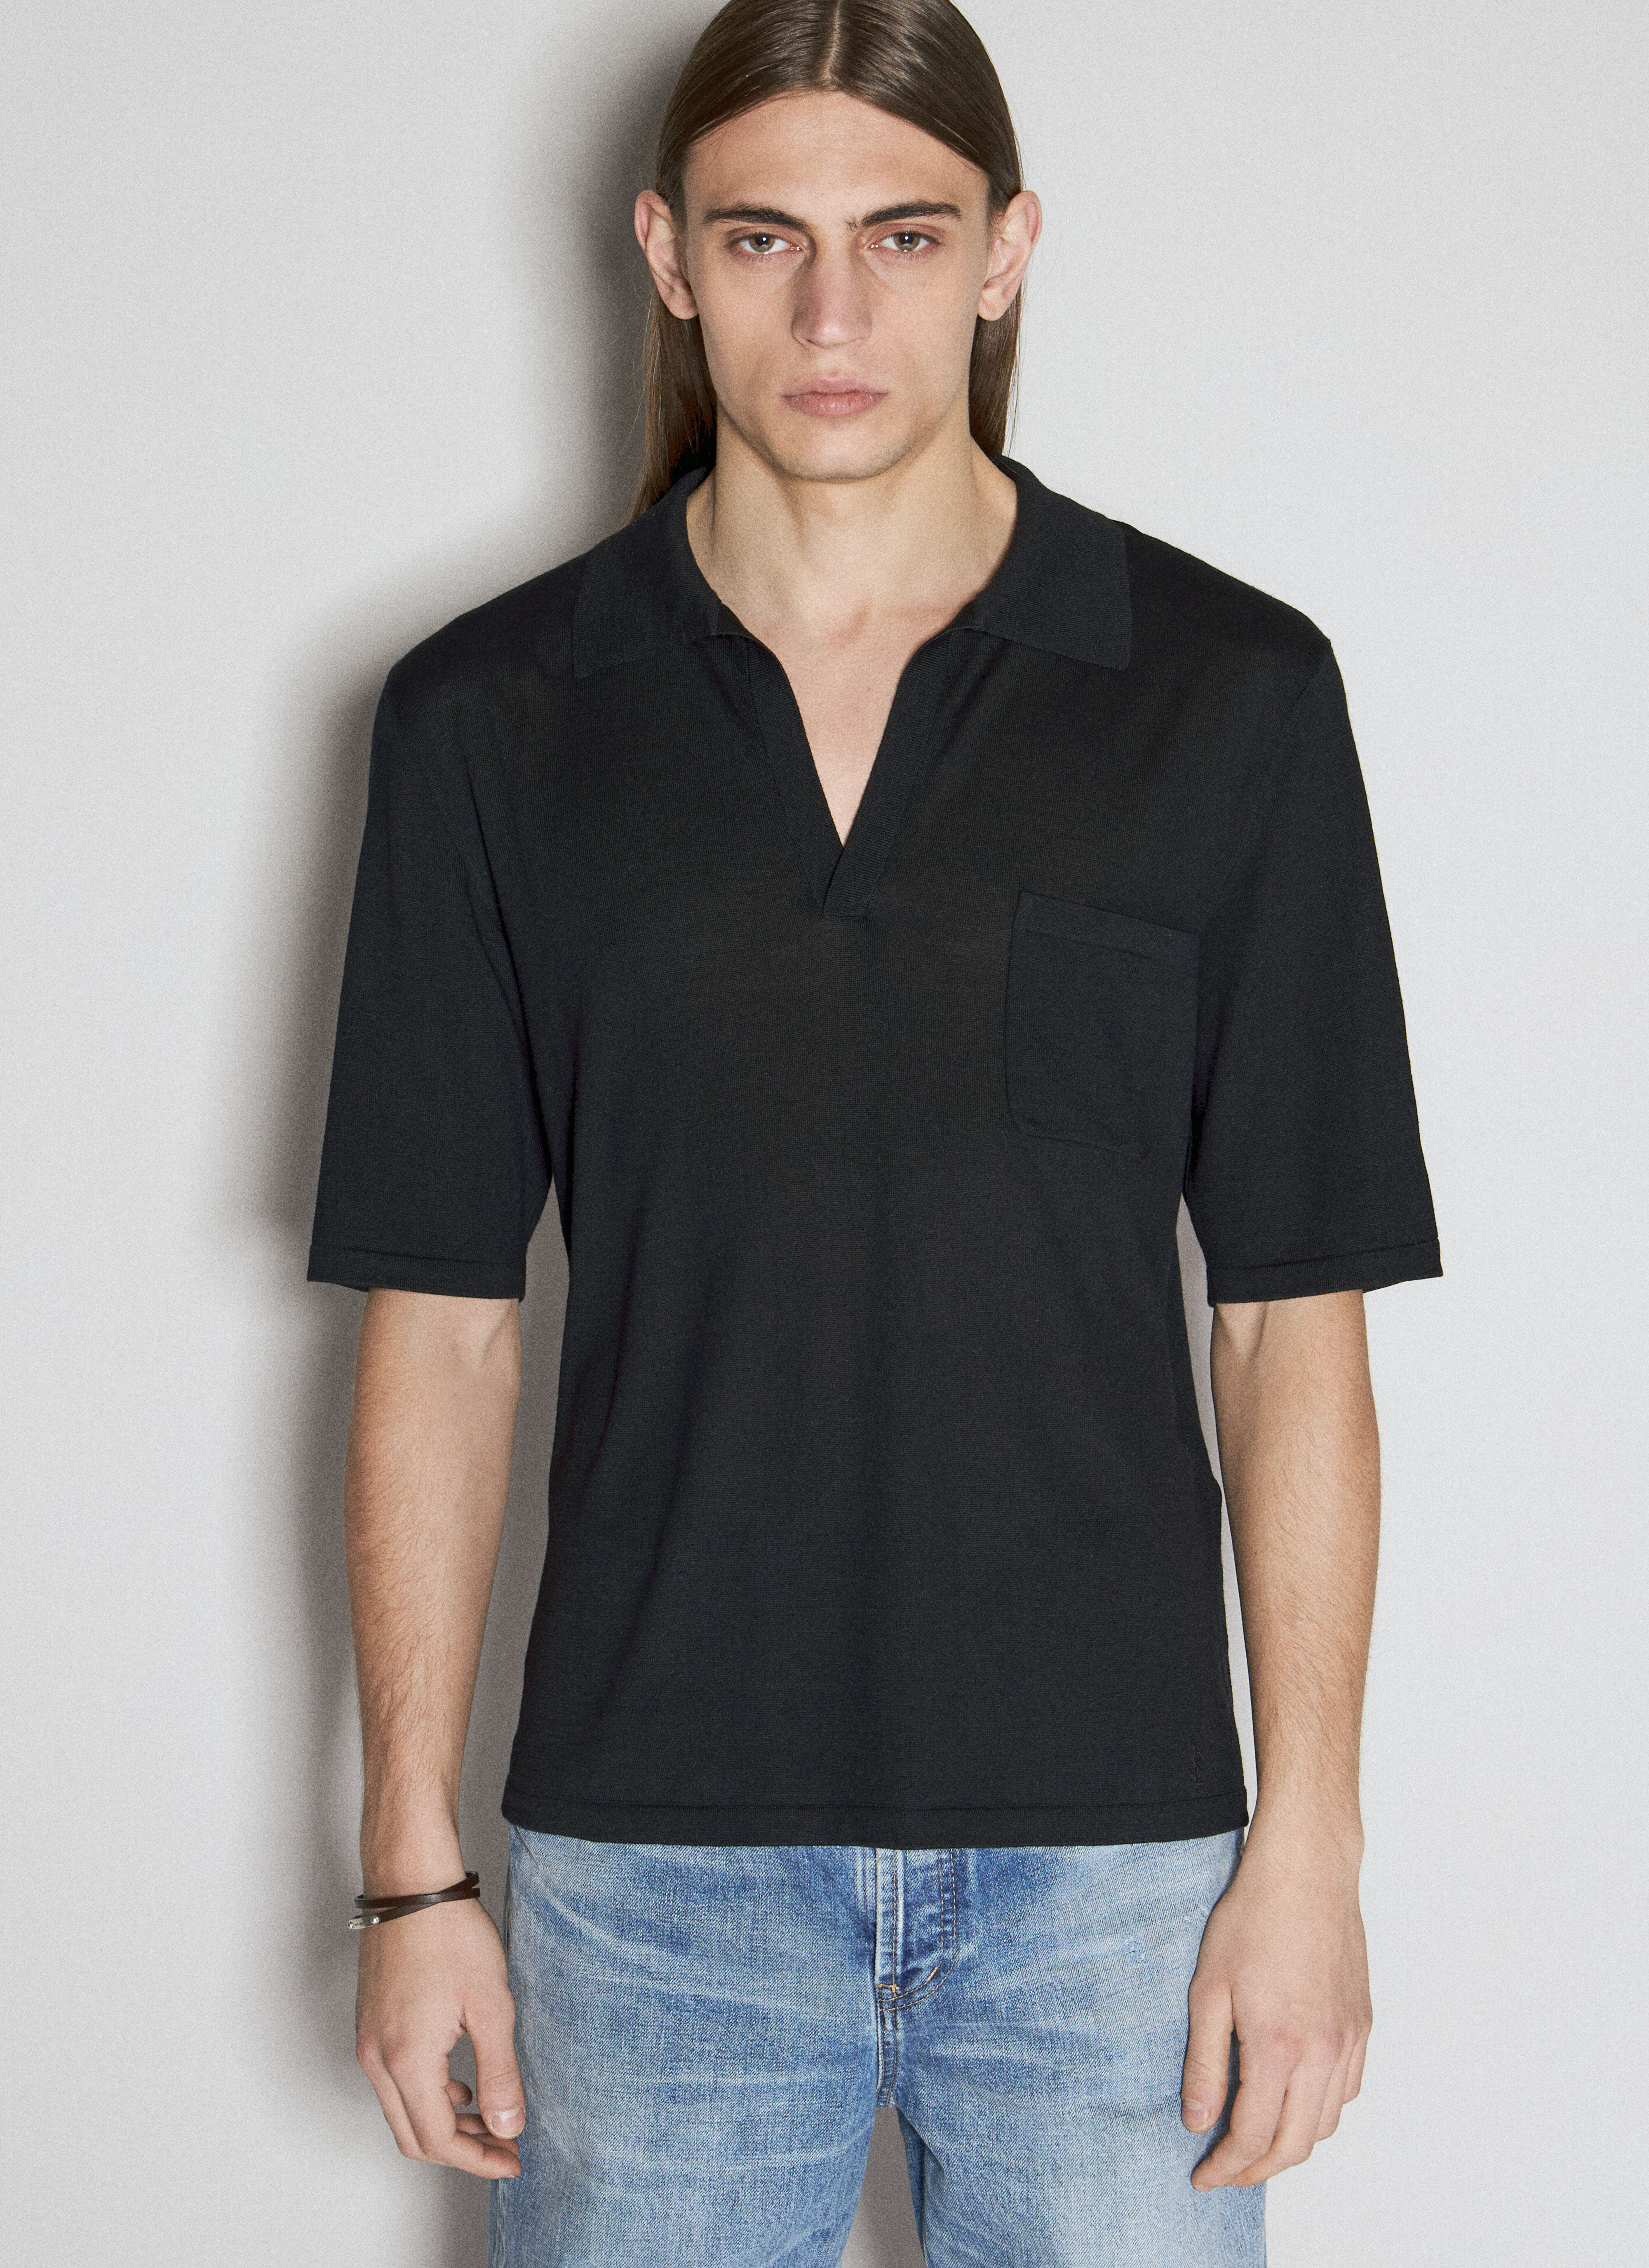 Saint Laurent Wool Knit Polo Shirt Black sla0256016